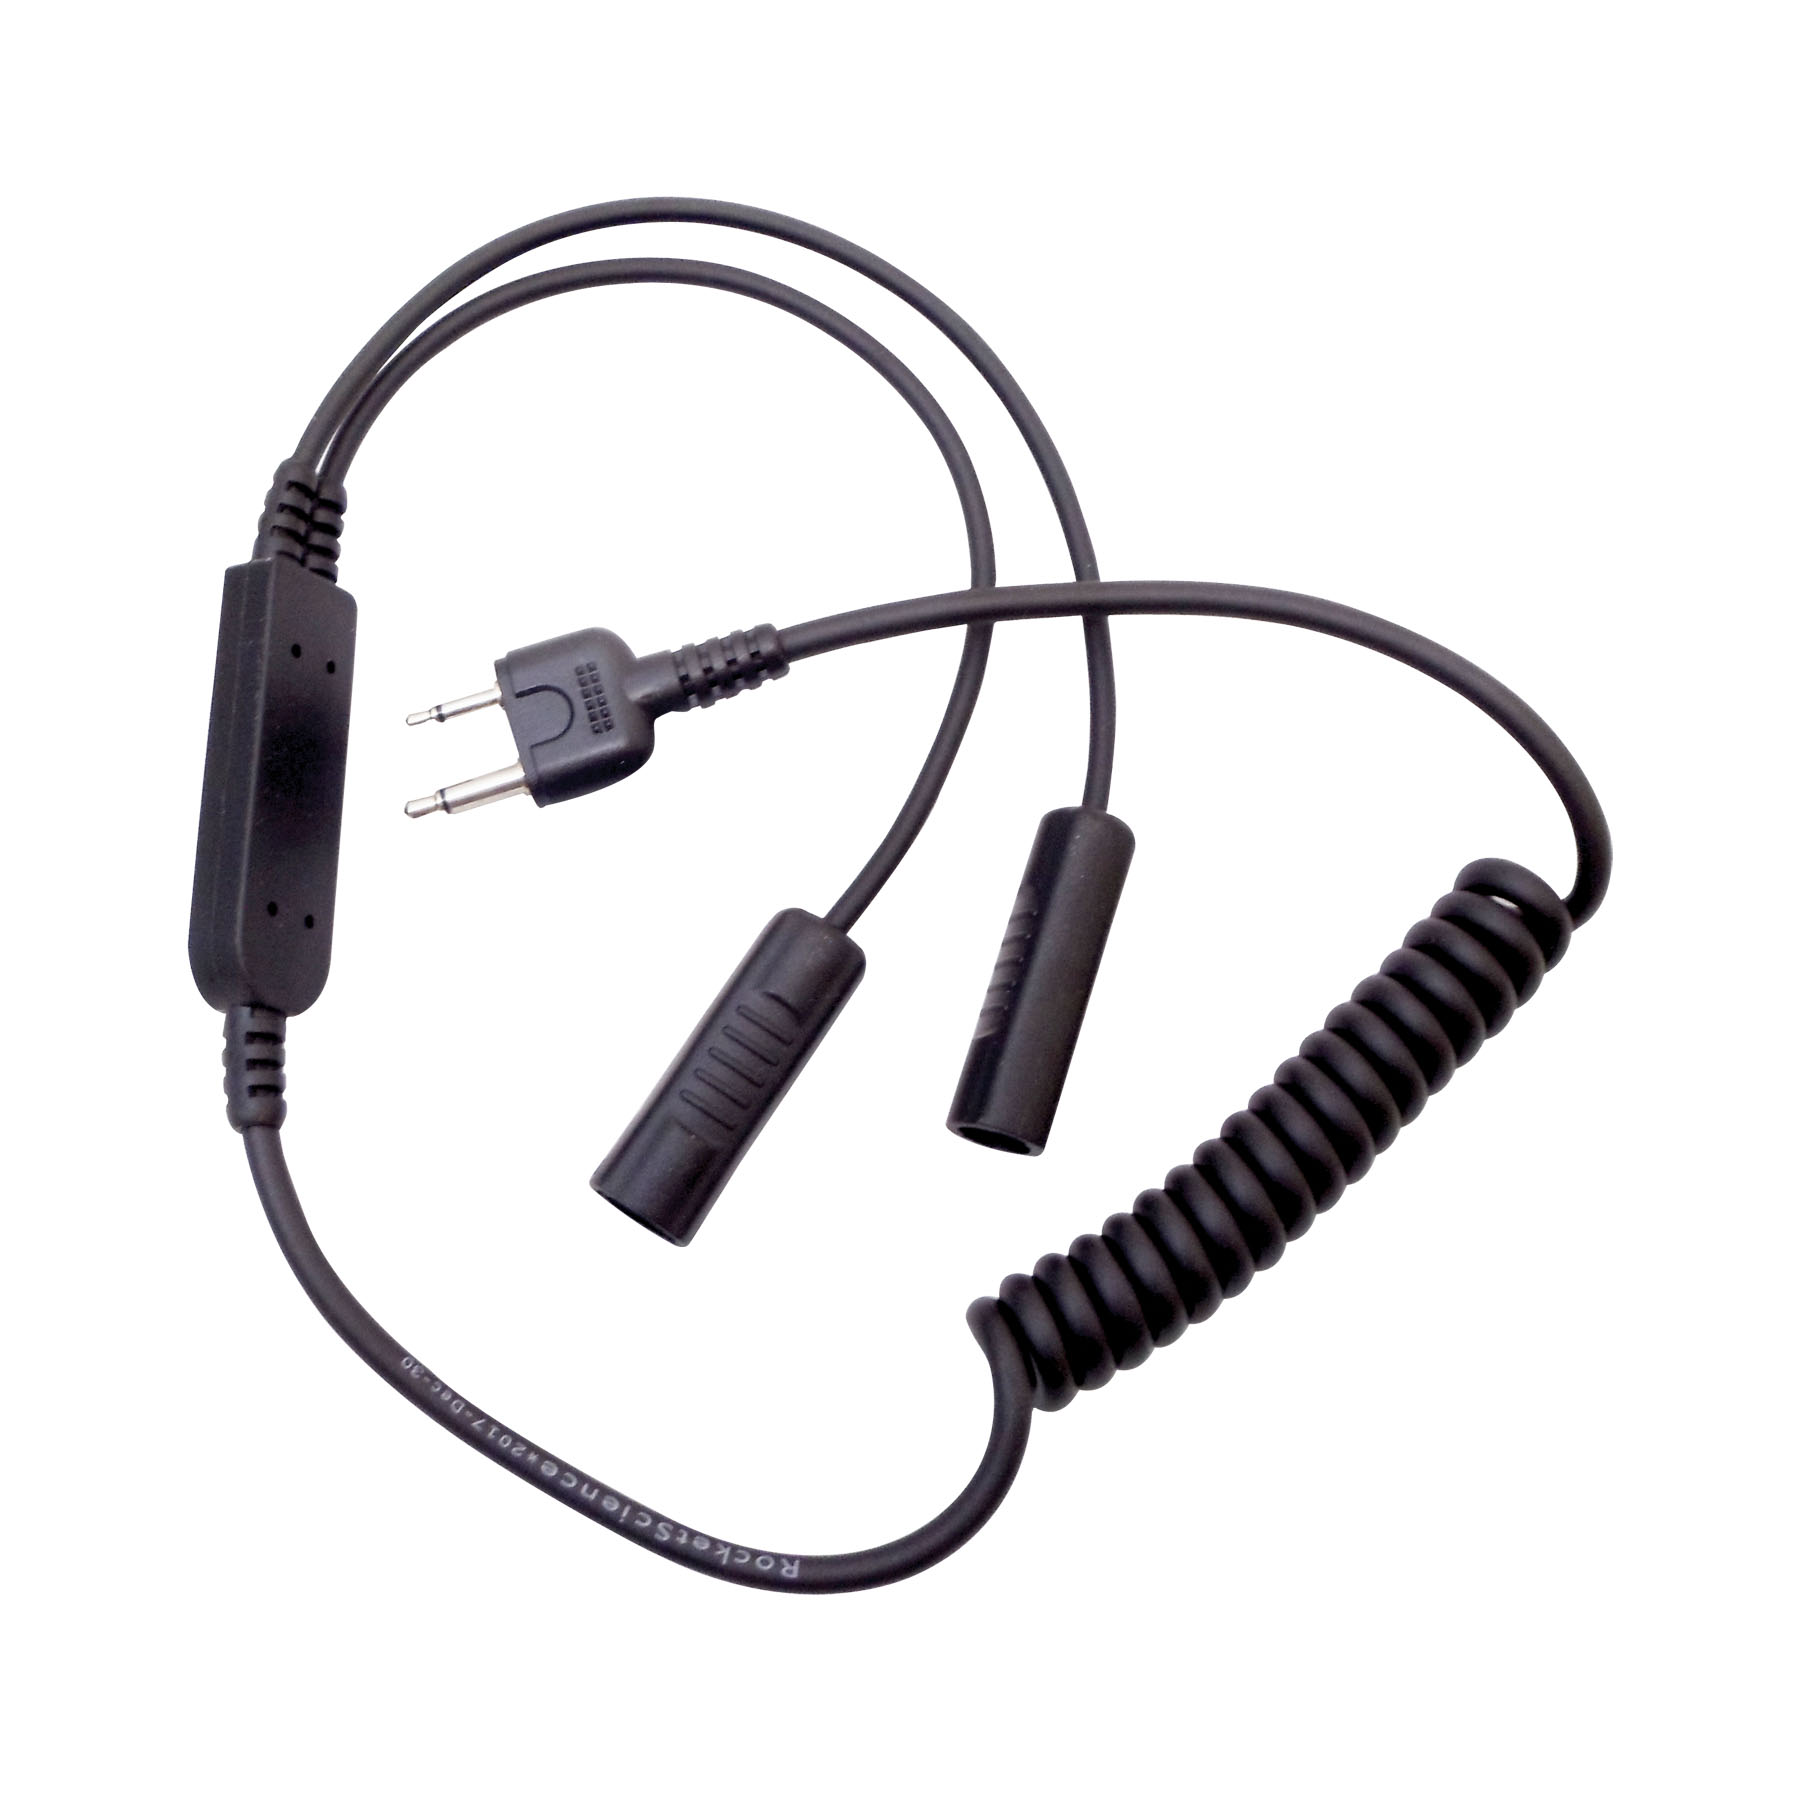 Klein - Helmet Headset Connector For Icom, Maxon, Cobra Handhelds, Midland 75-822, Motorola, Ritron & Vertex Radios With 2 Prong